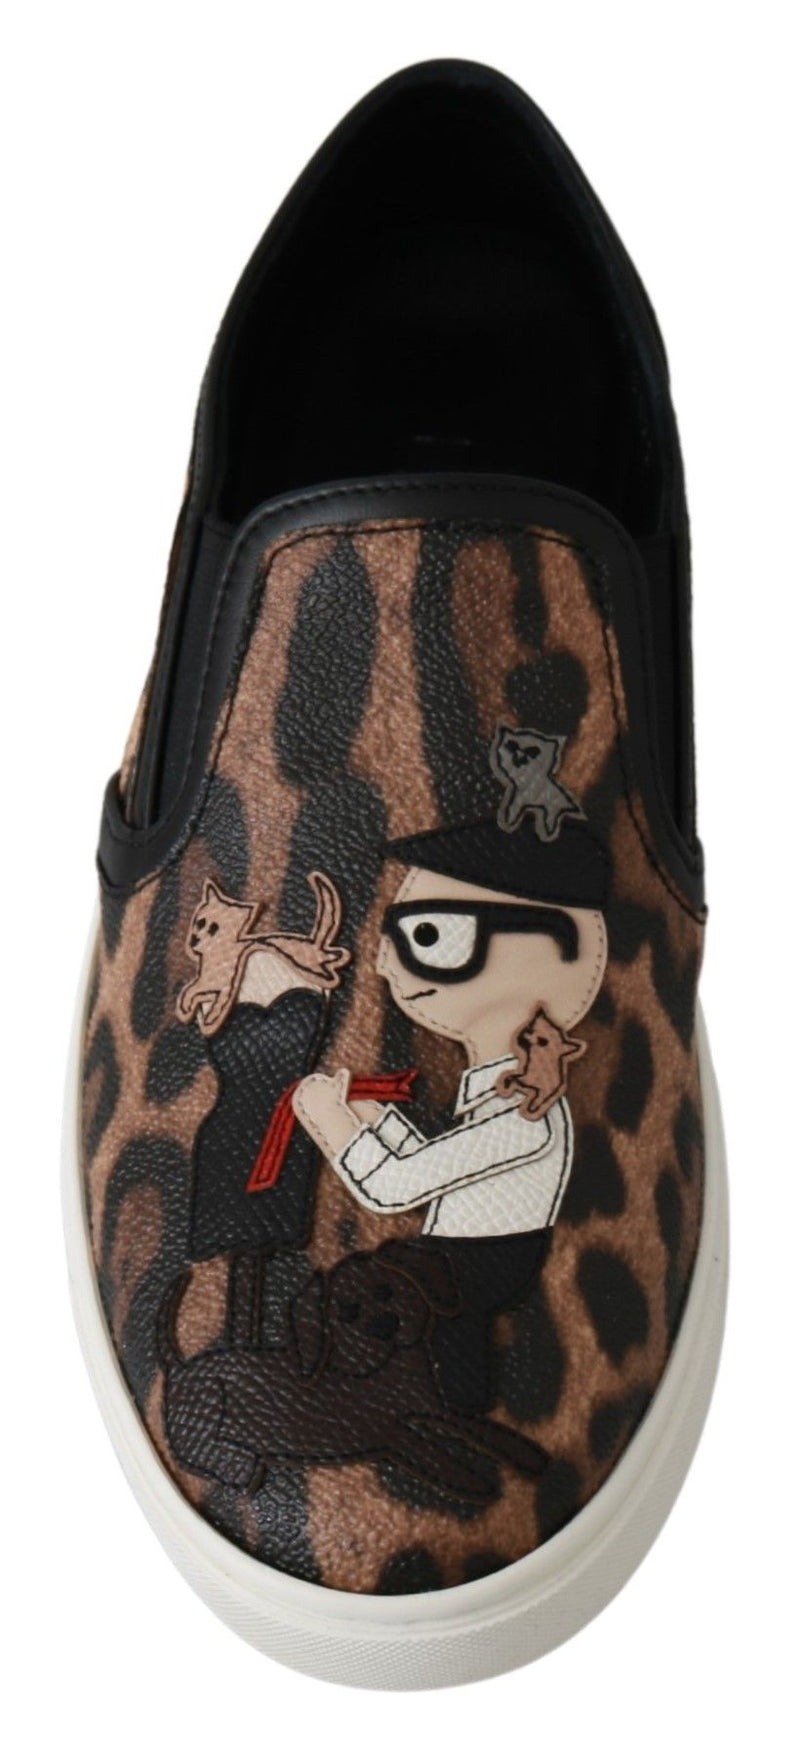 Dolce & Gabbana Chic Leopard Print Loafers for Elegant Women's Comfort